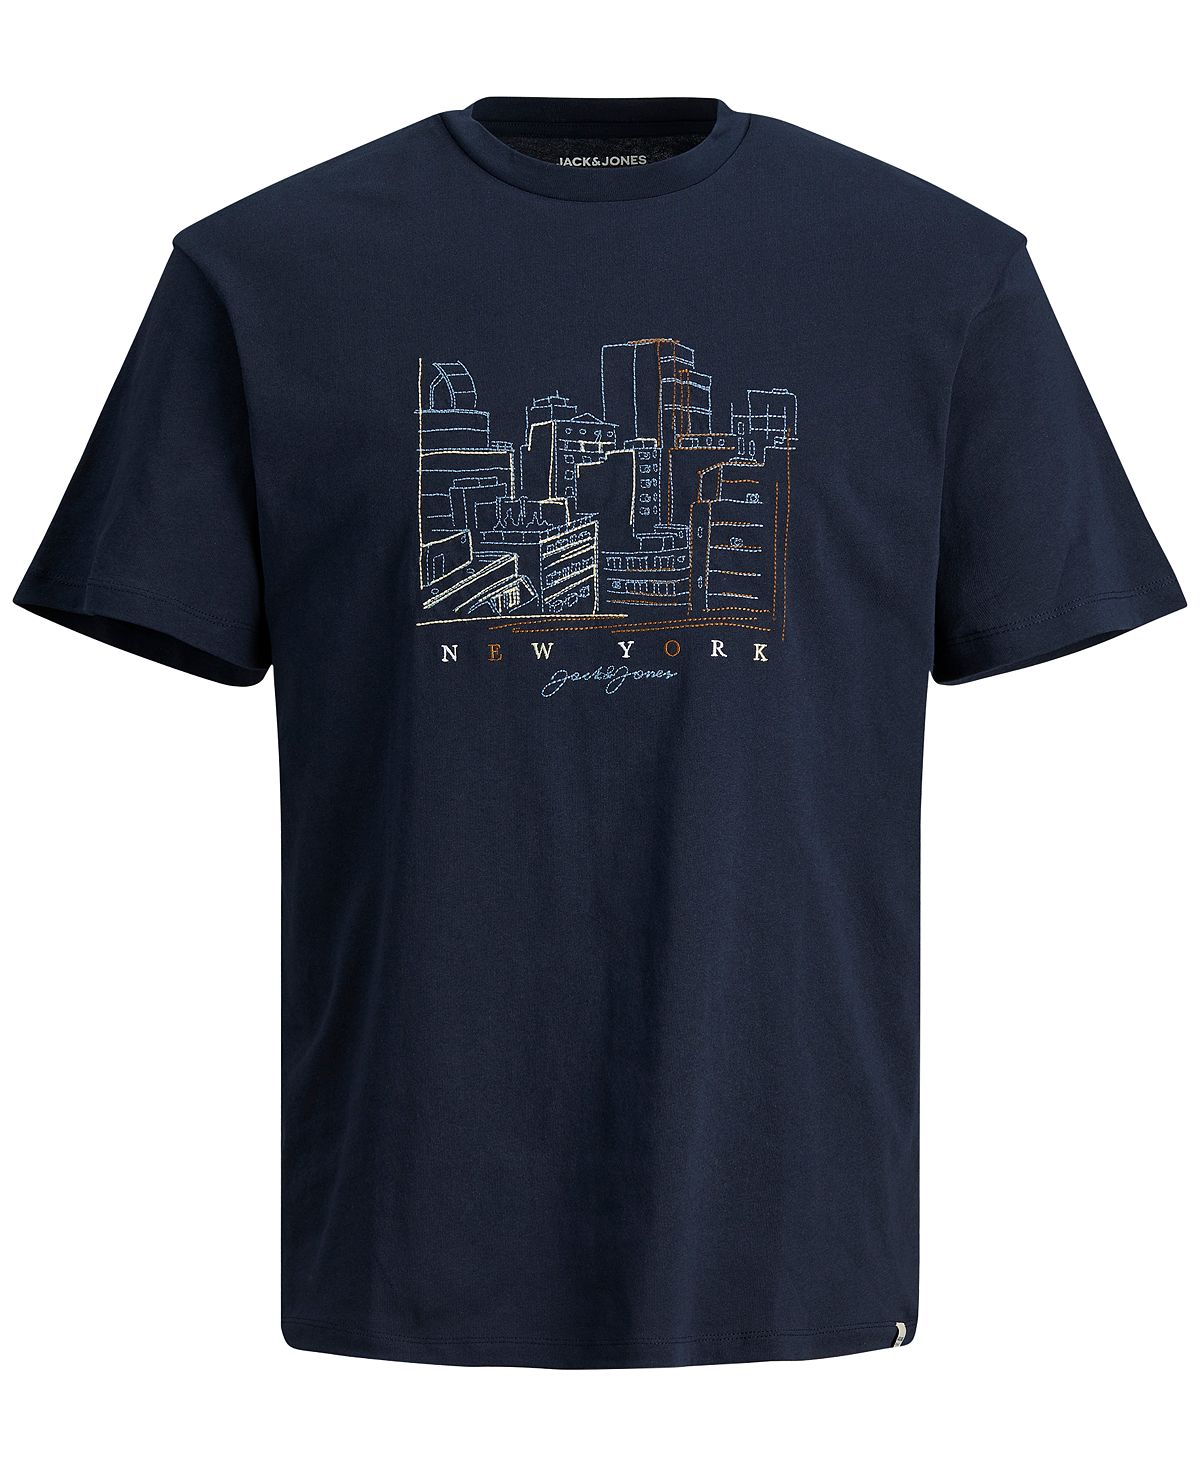 Jack & Jones Embroidered Nyc Cityscape T-shirt Navy Blazer